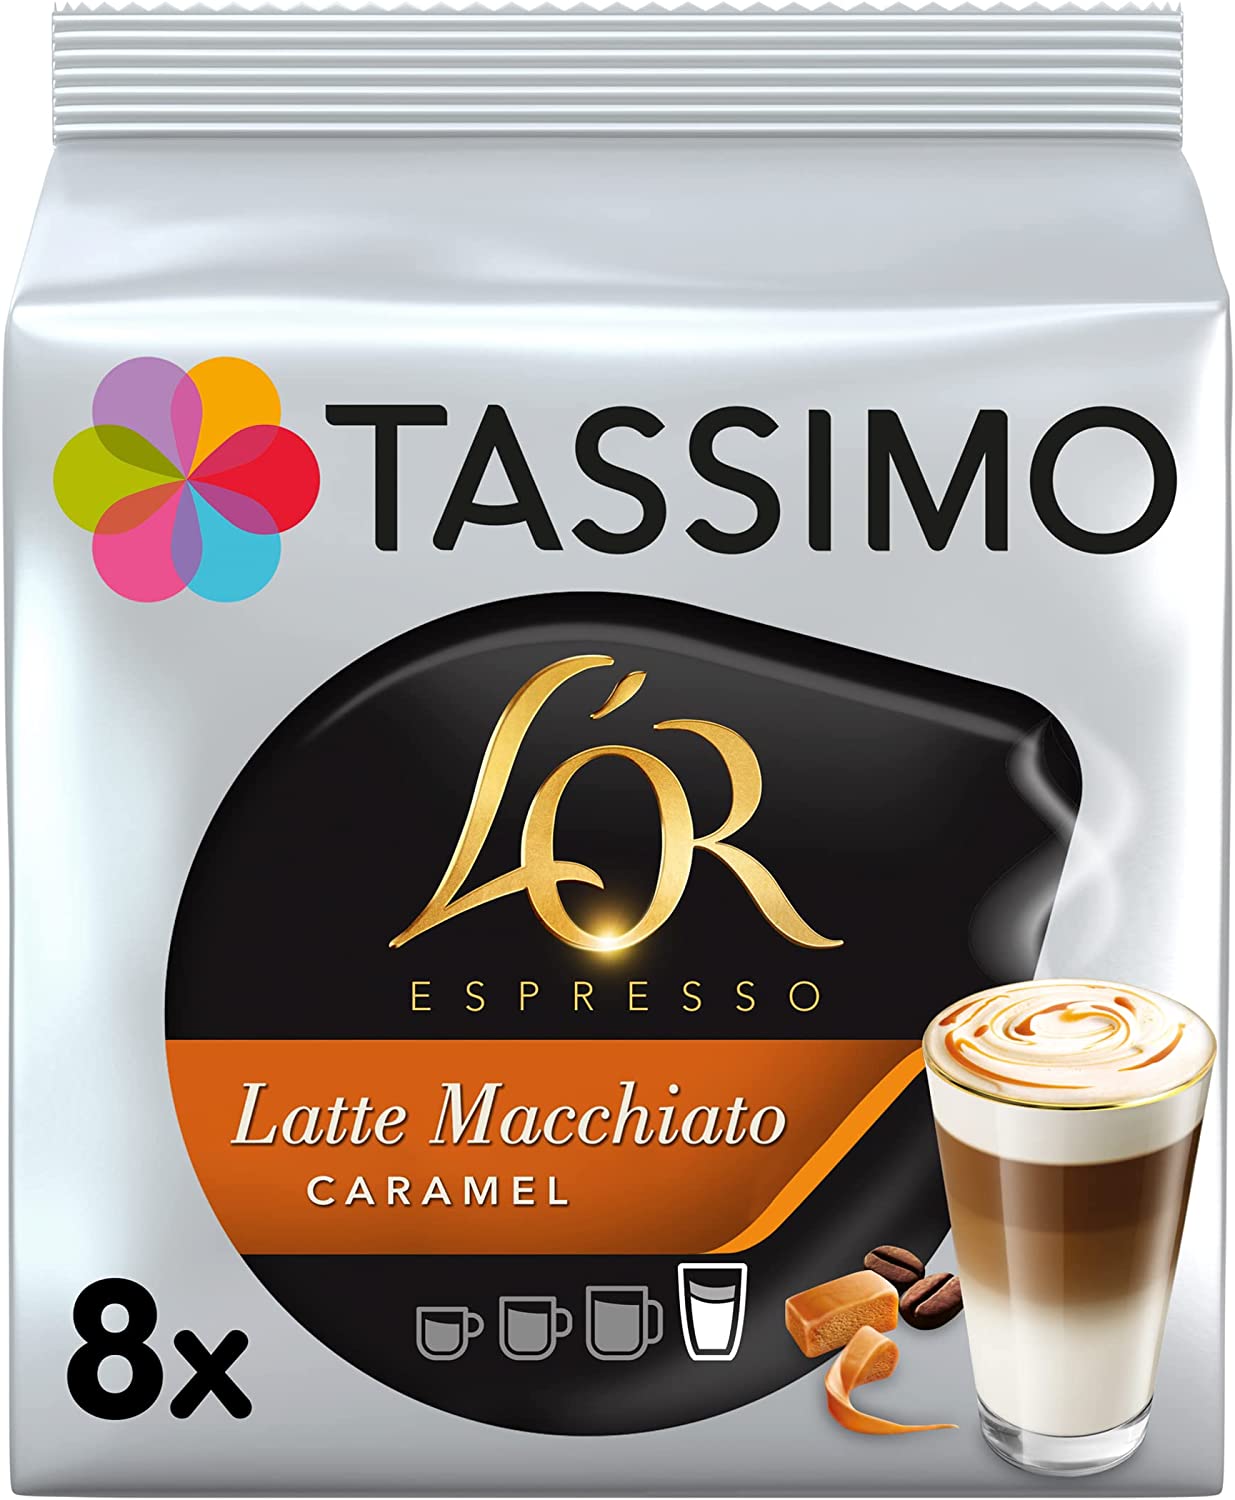 Tassimo: présentation Latte Macchiato caramel 